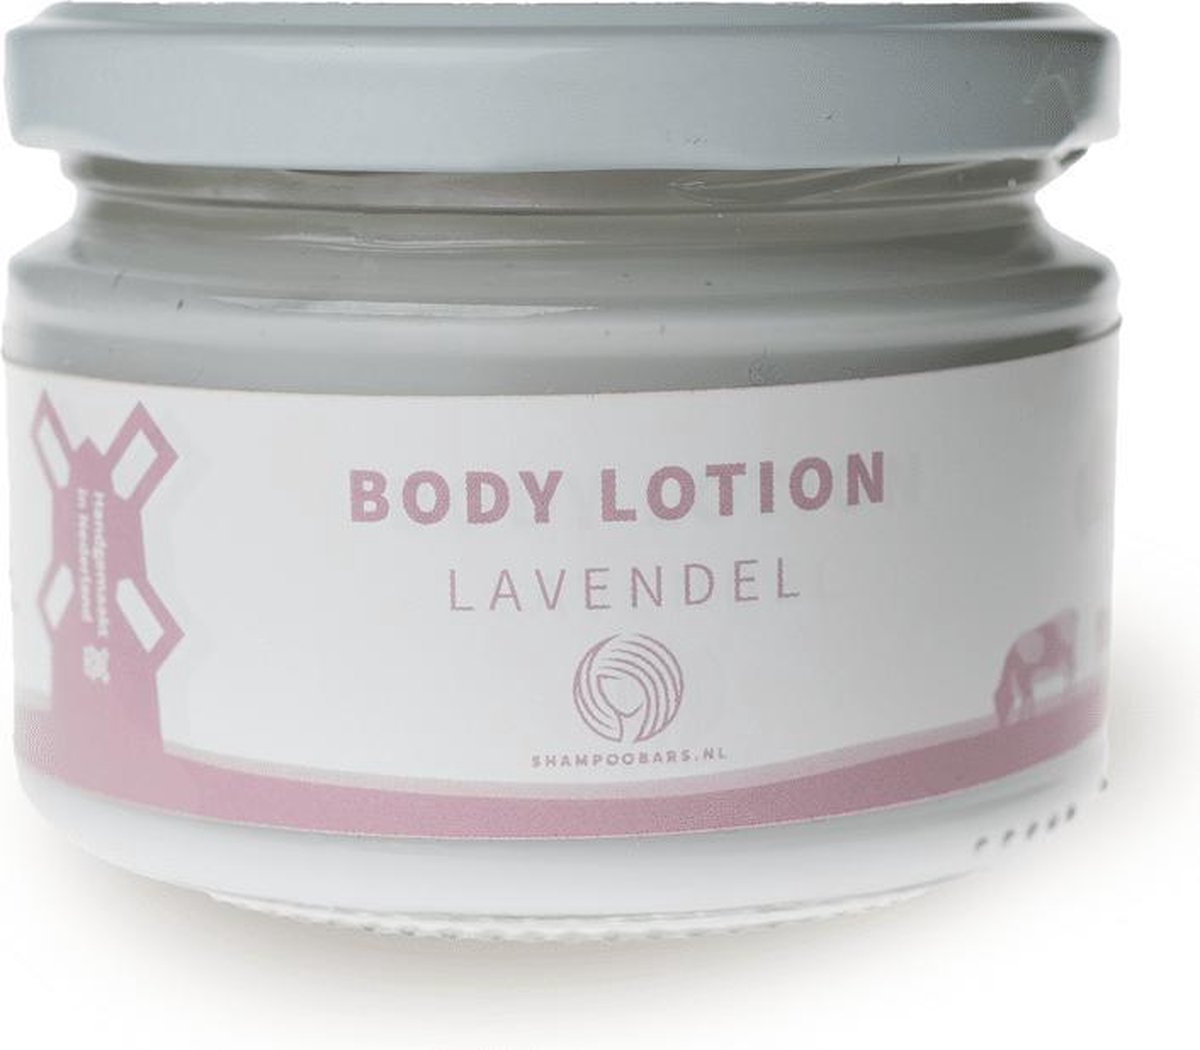 Shampoo Bars - Body Lotion - Lavendel